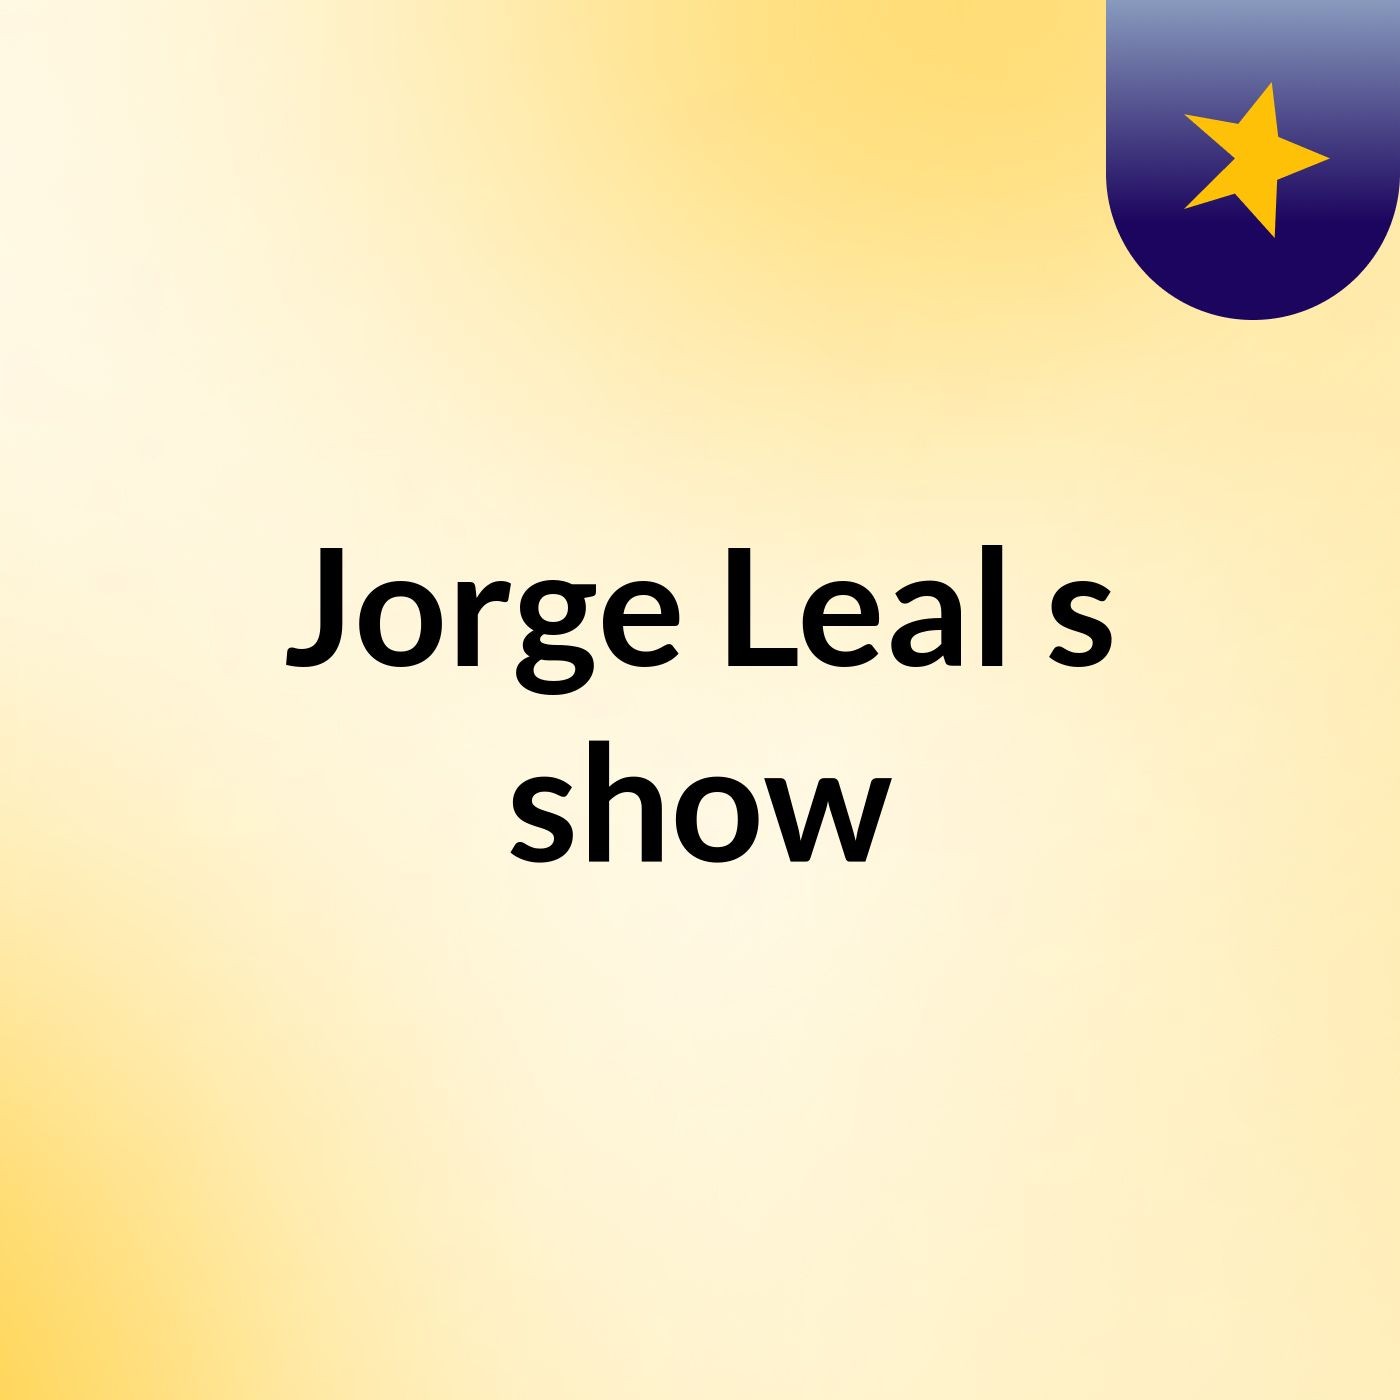 Jorge Leal's show